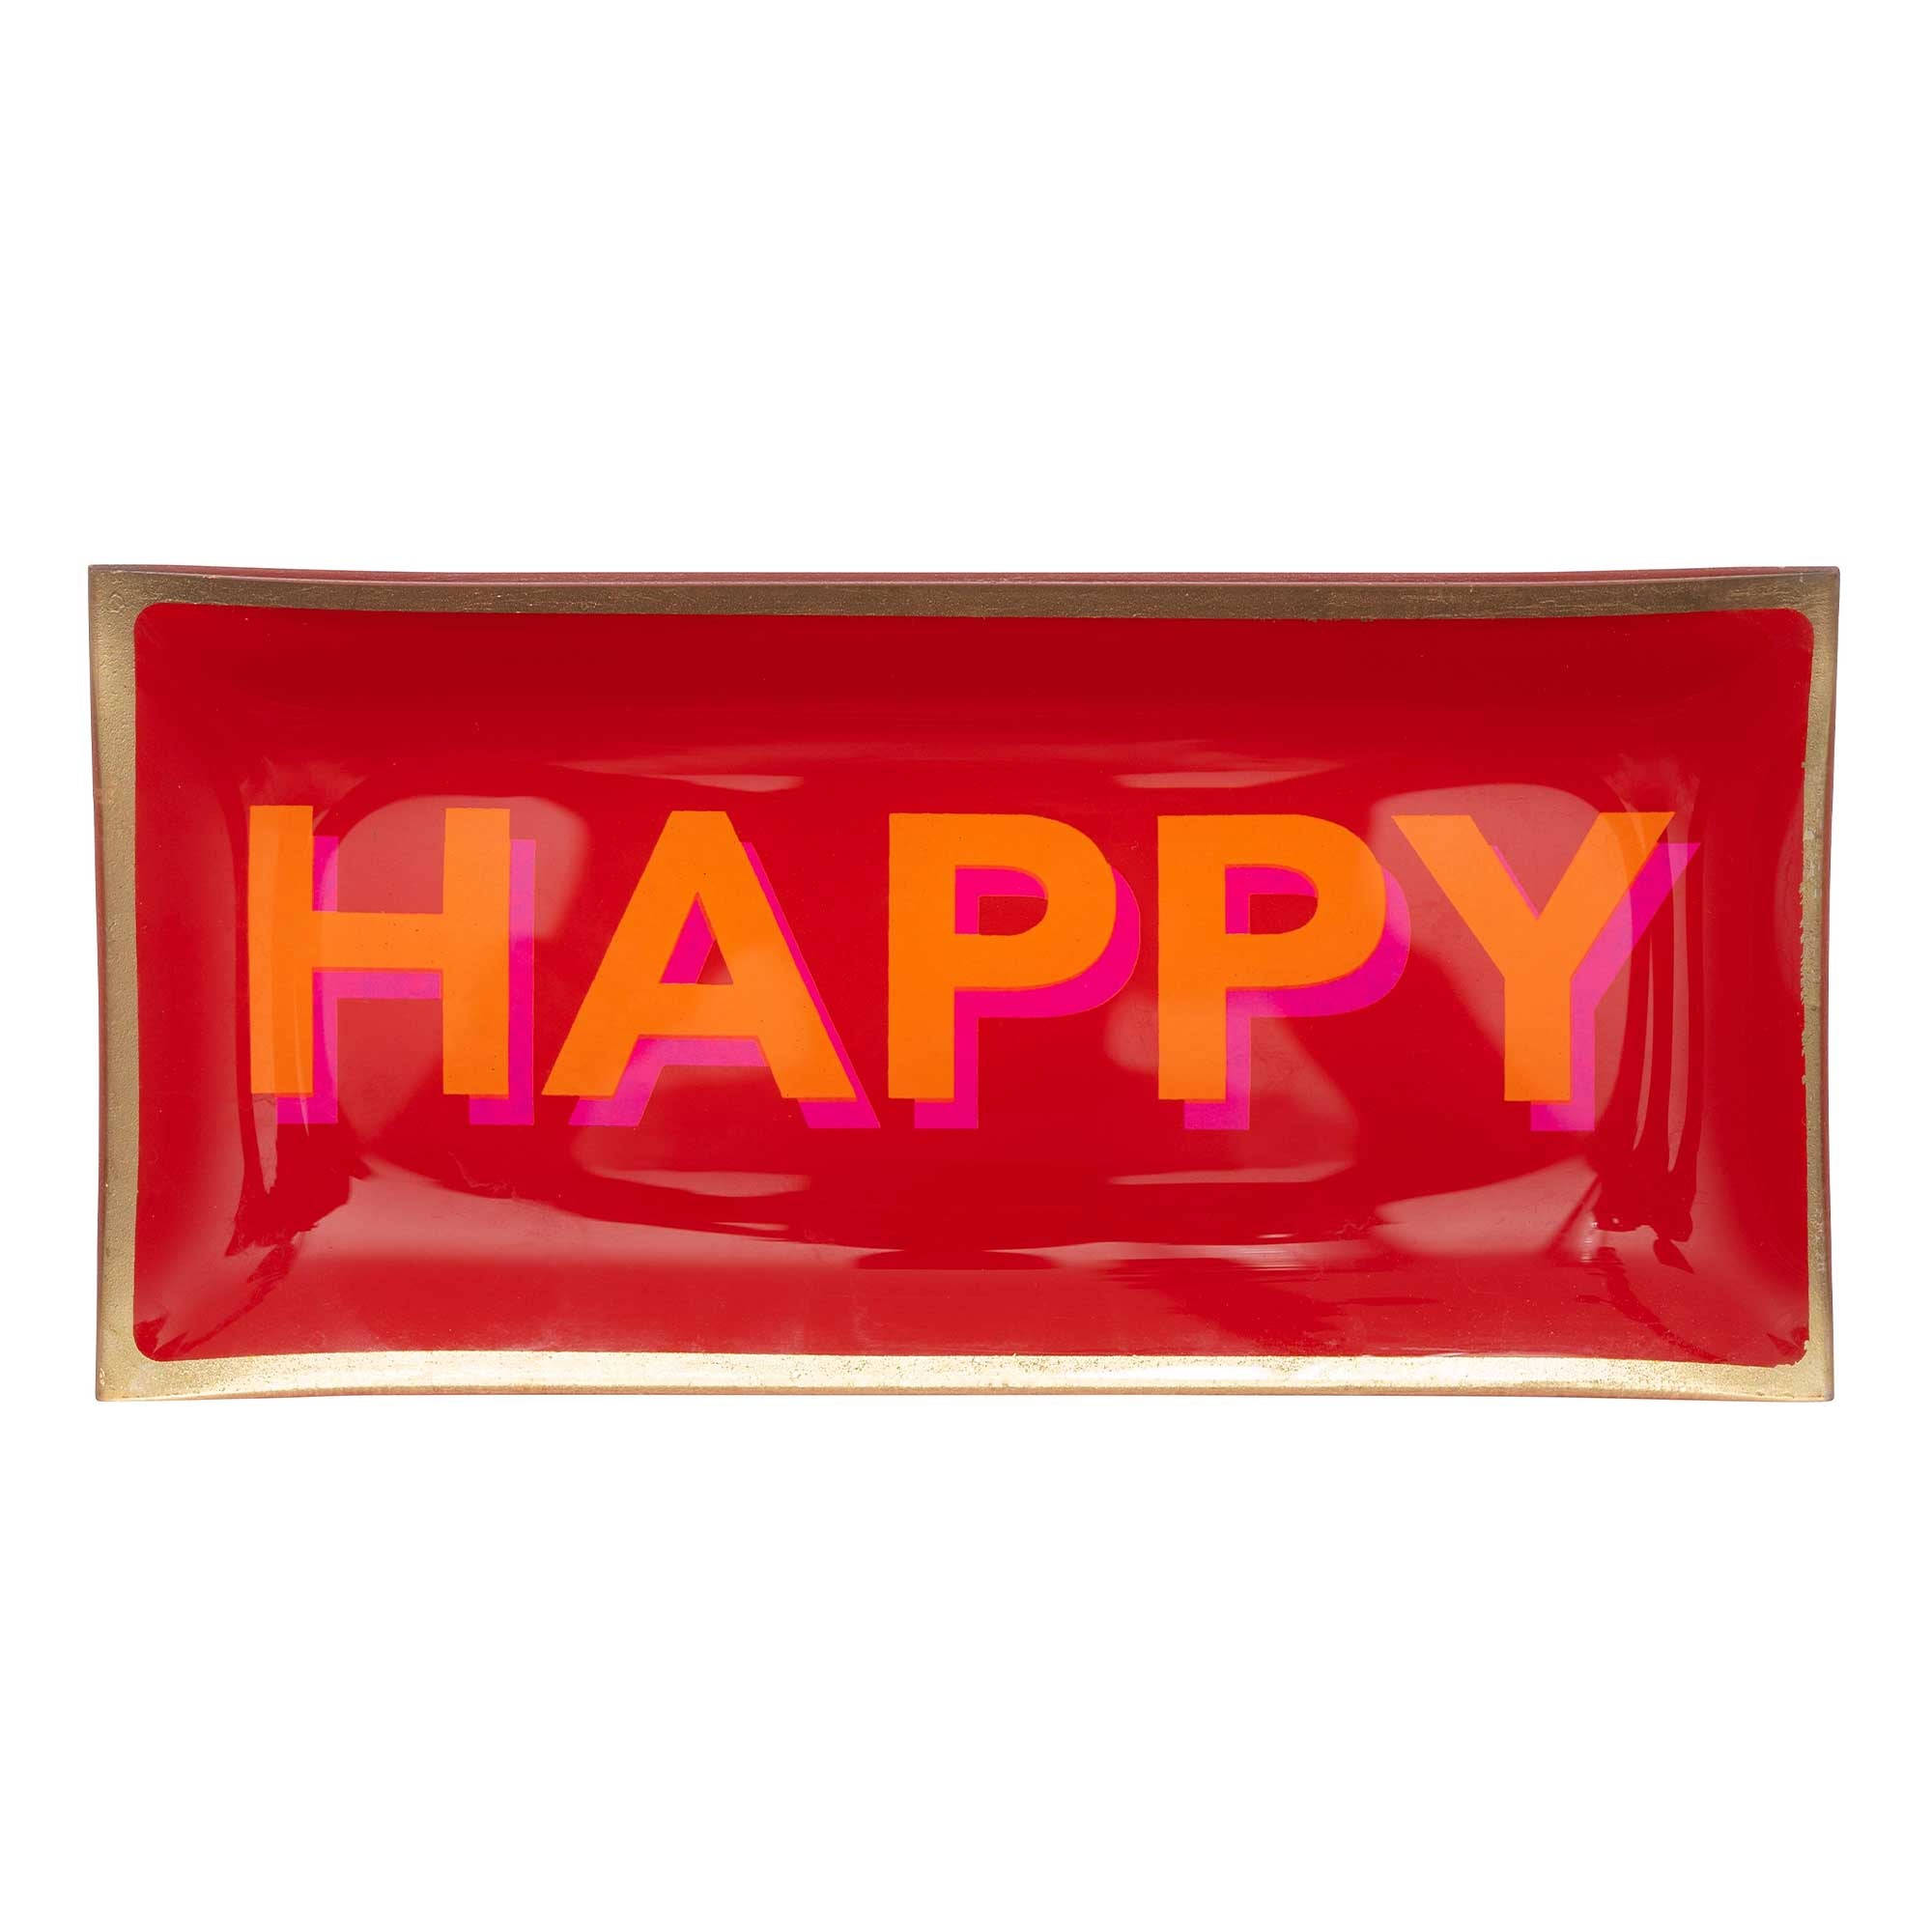 Plato de cristal "HAPPY" rojo